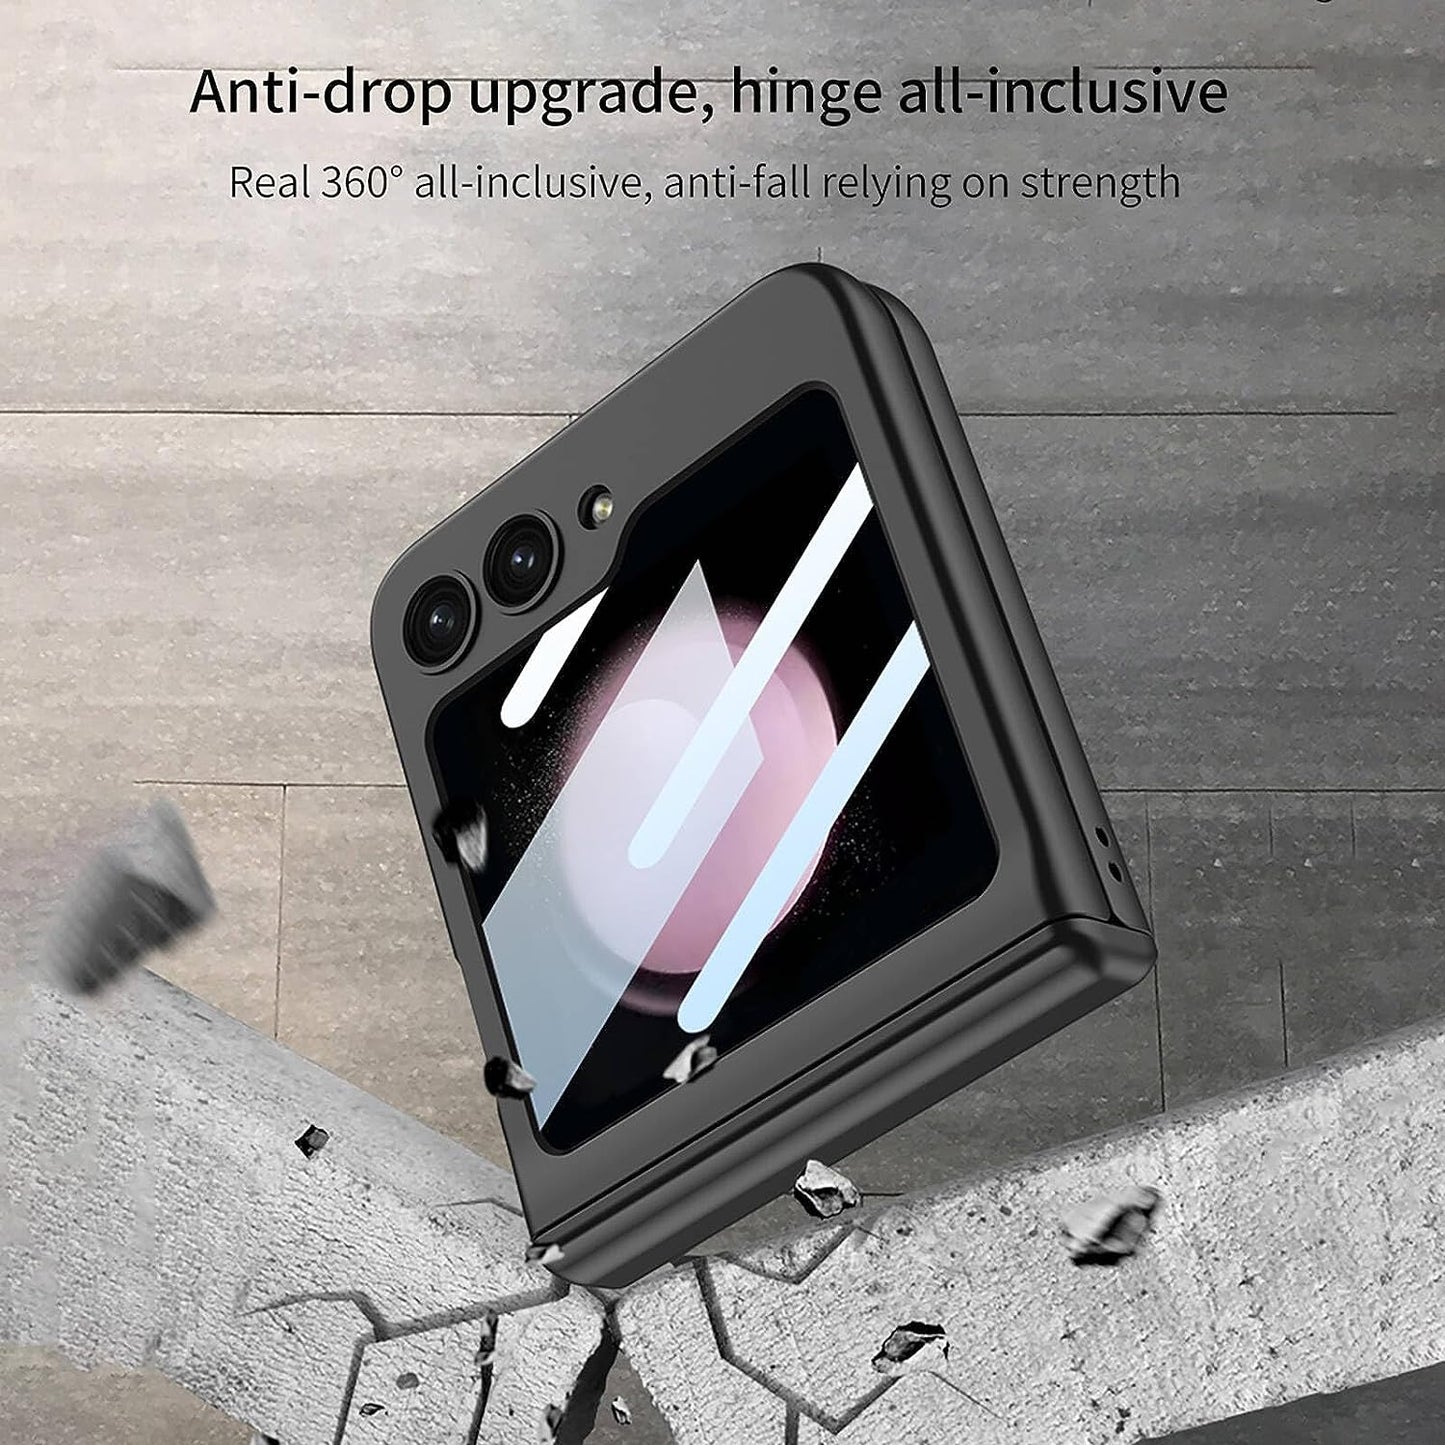 Z Flip 5 Hinge Case with Screen Protector - Luxandluxy